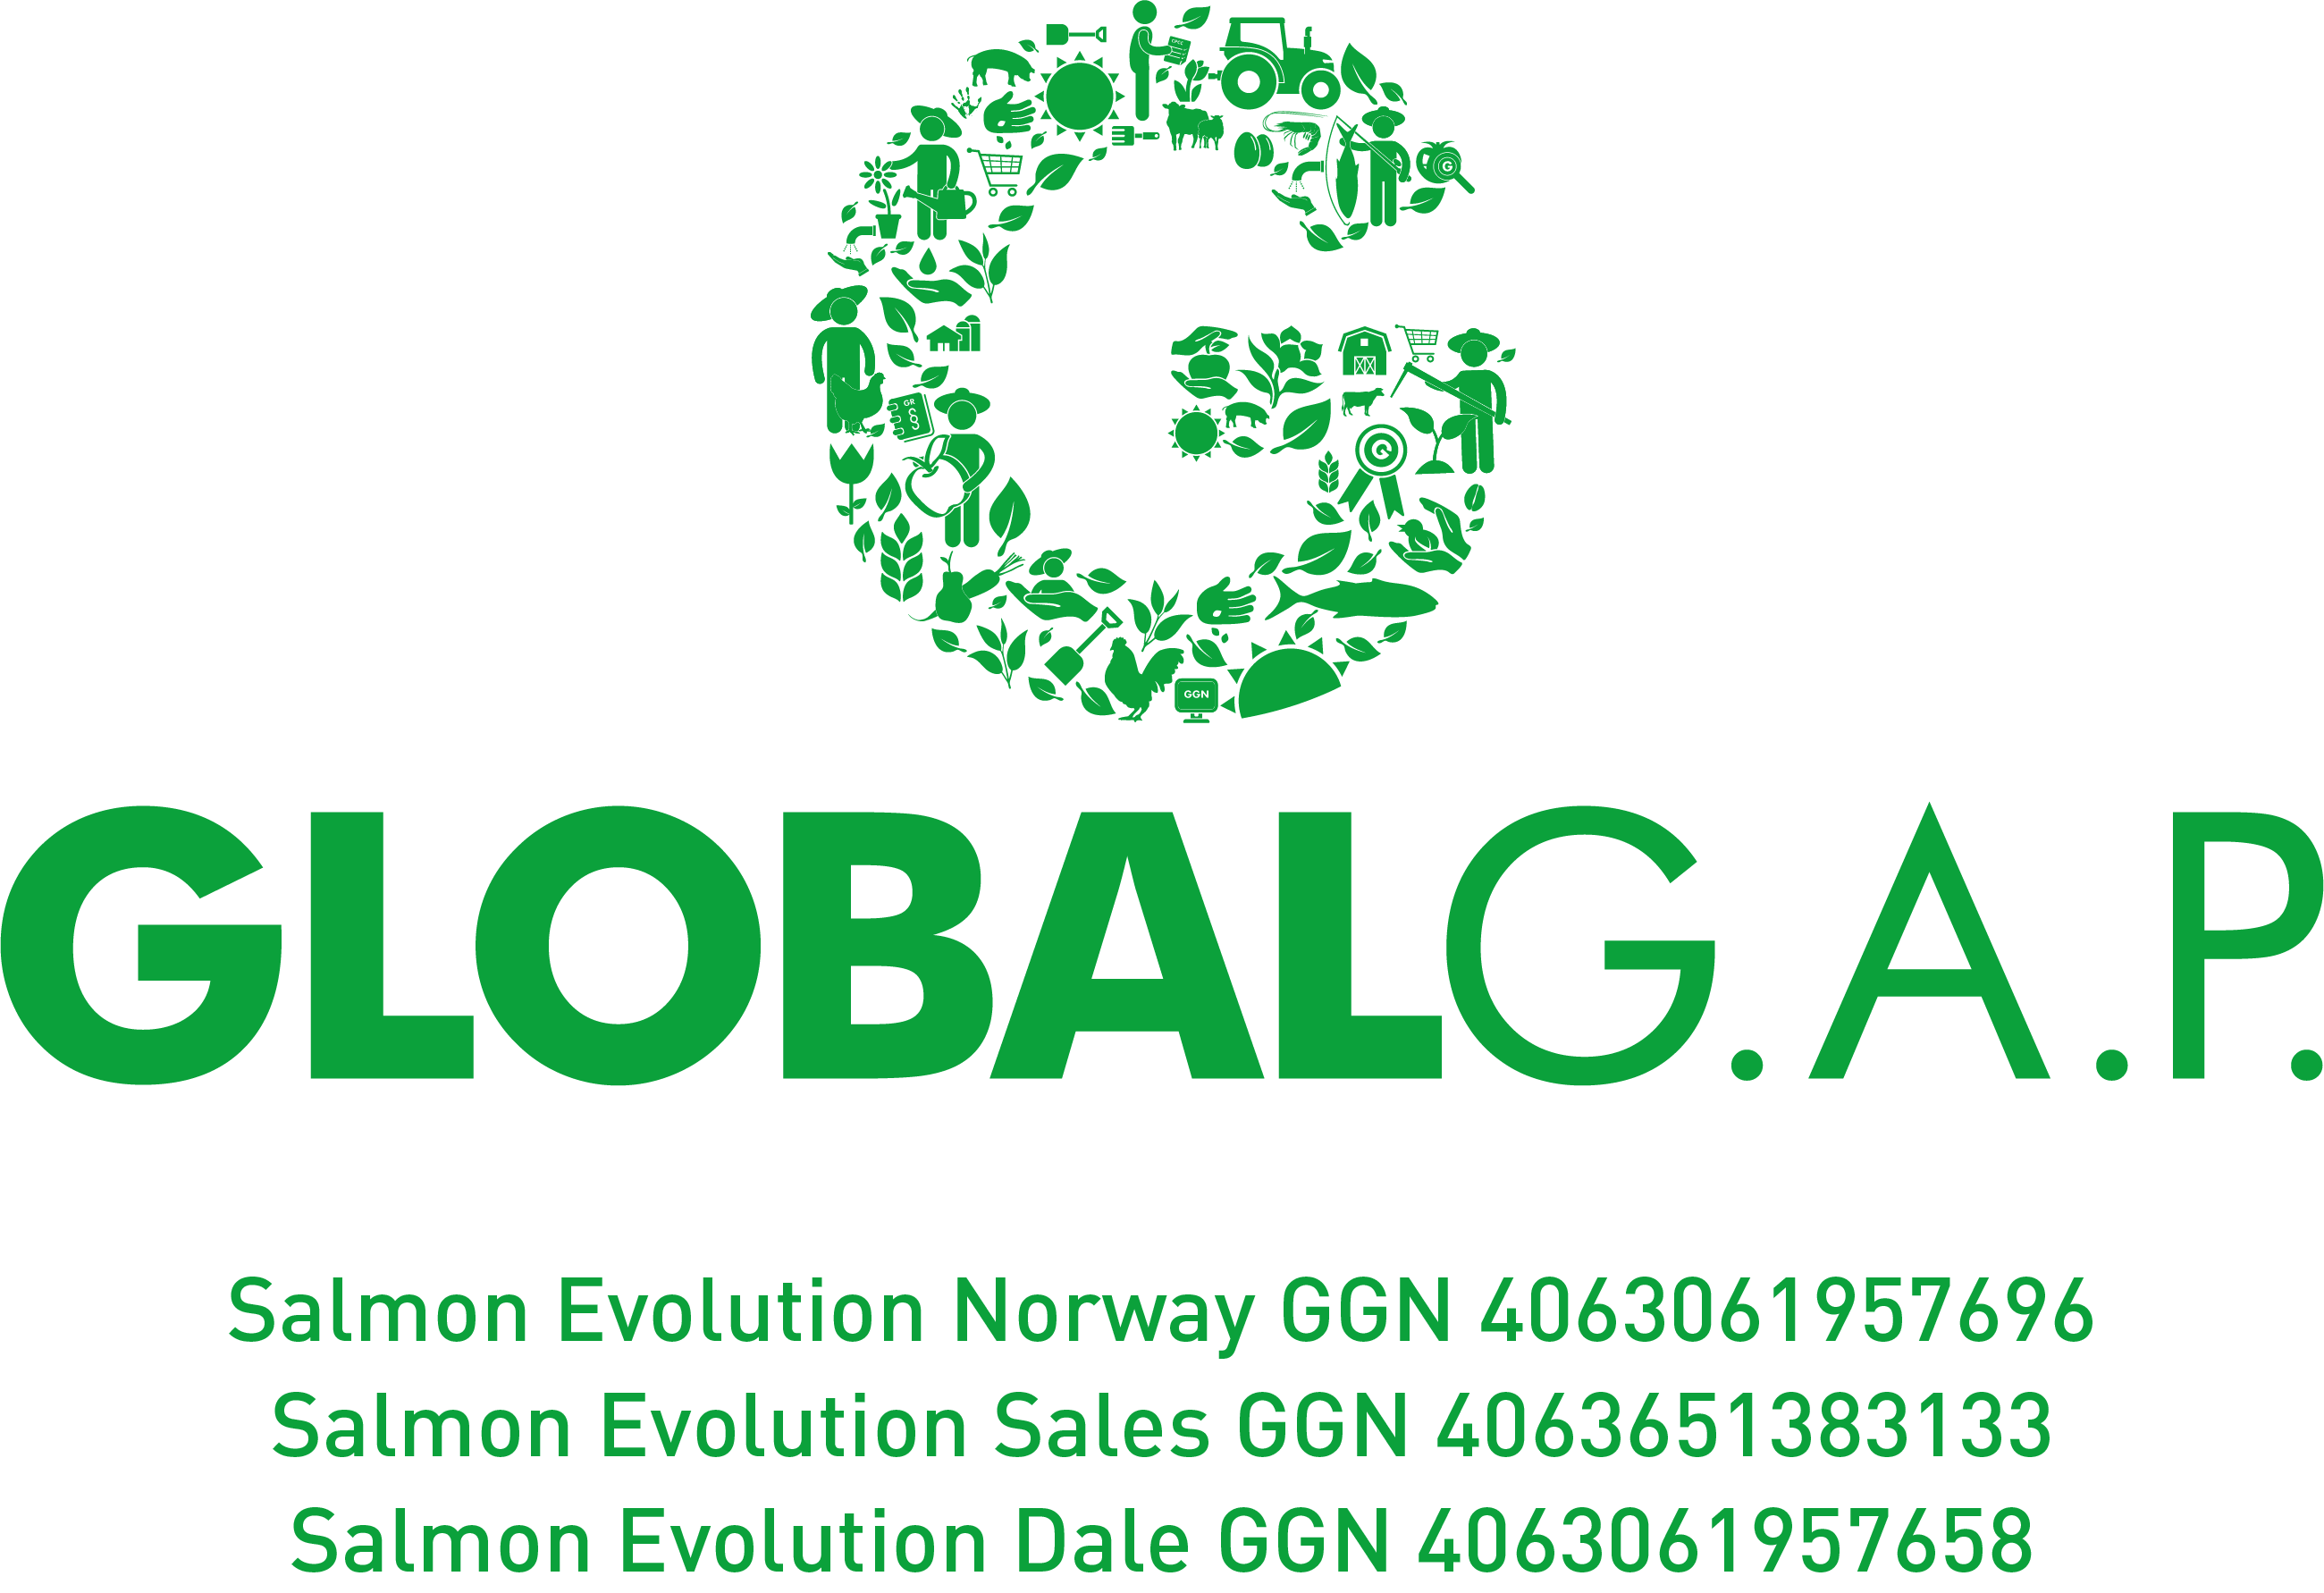 Salmon Evolution Global GAP. Logo